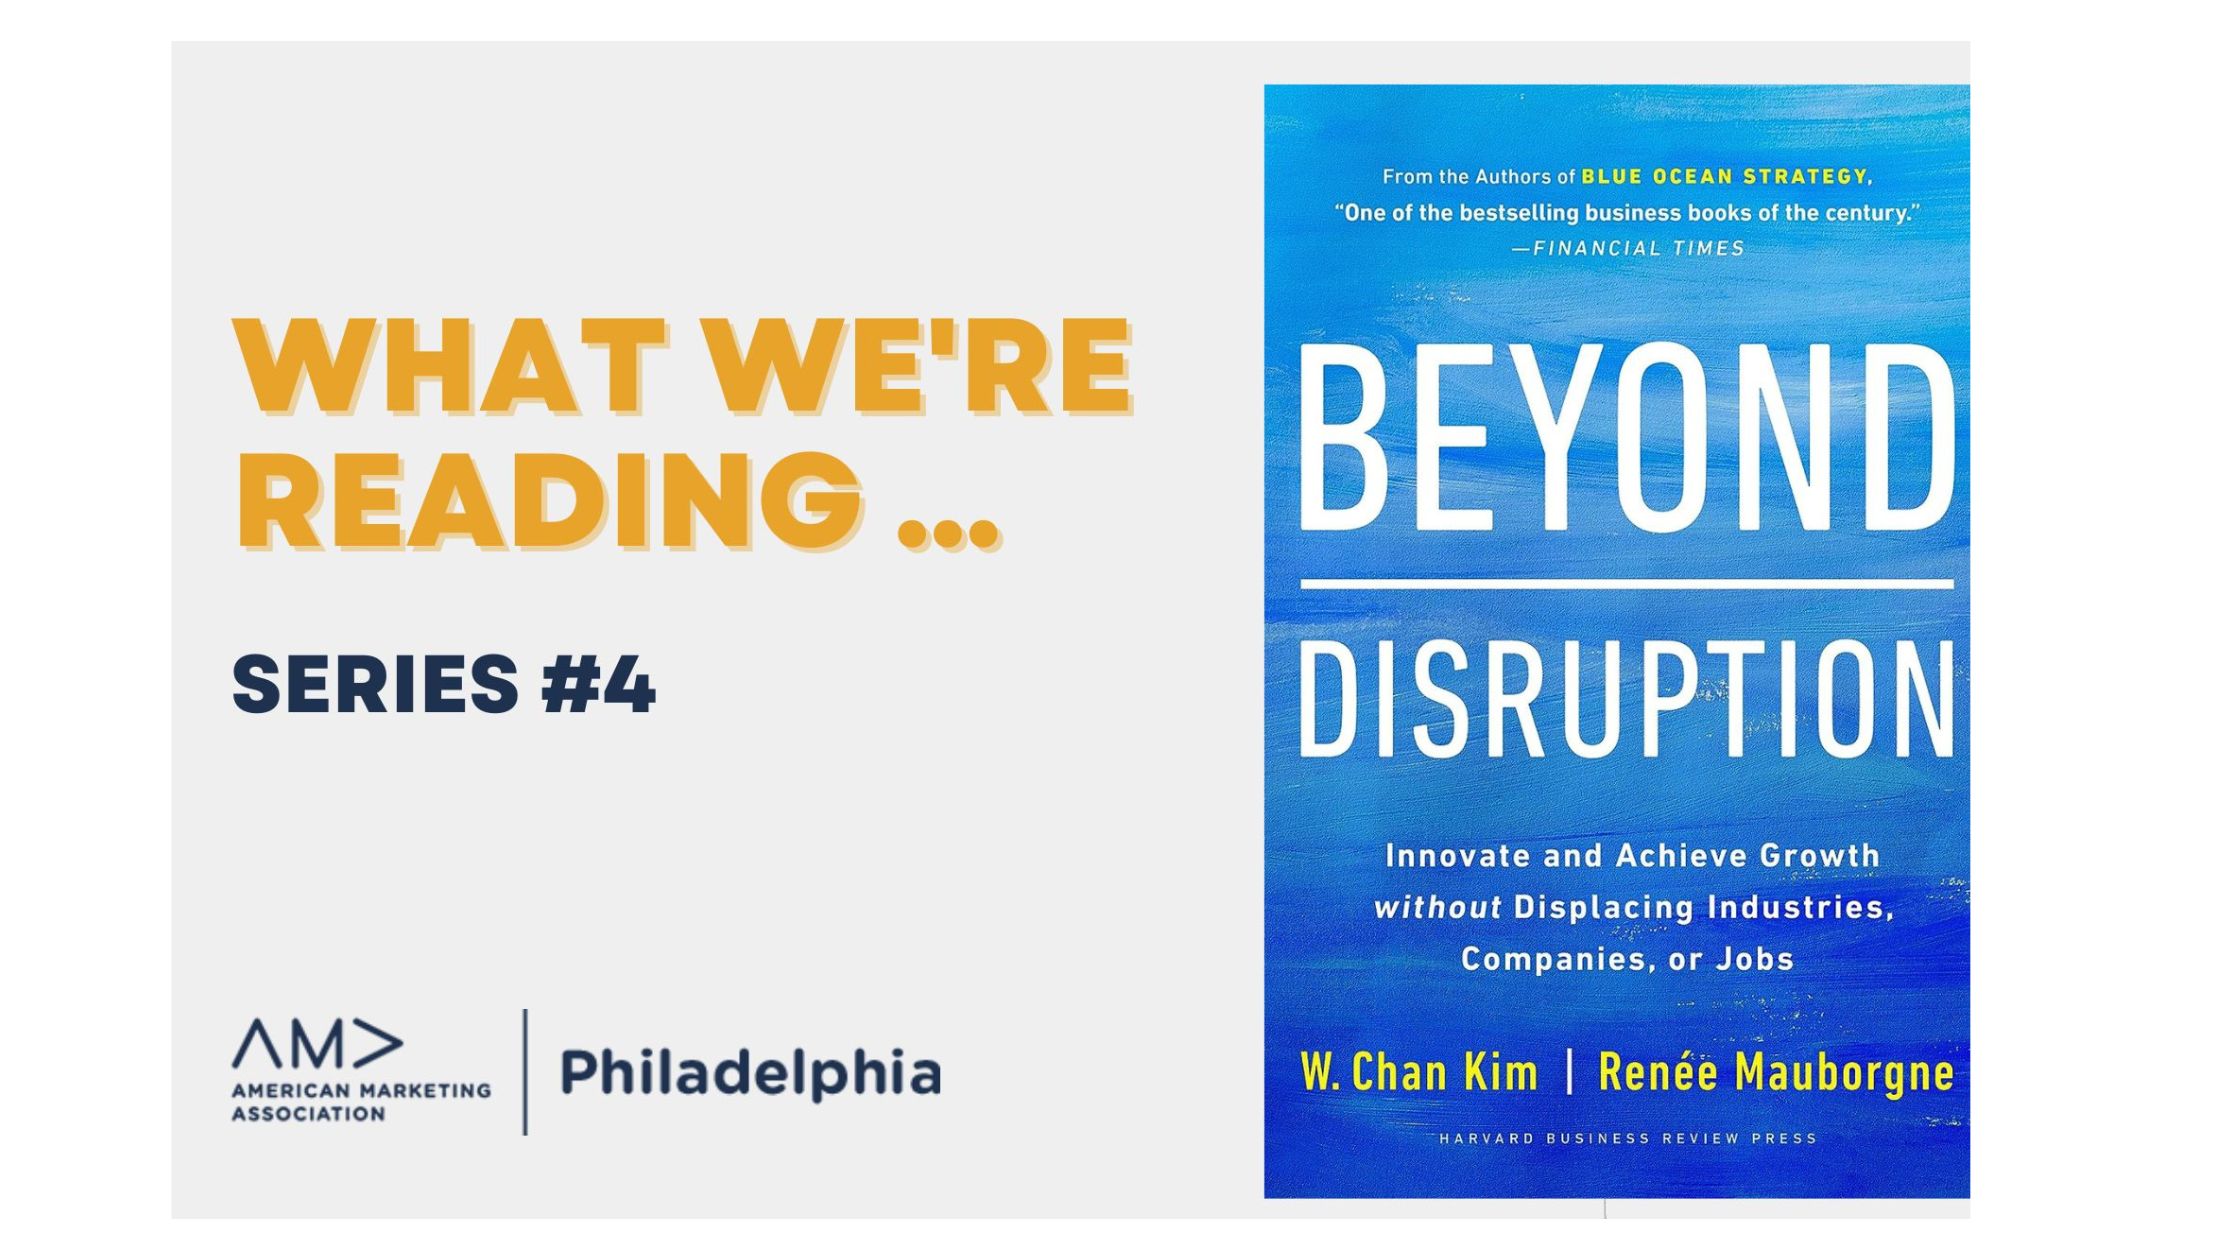 What We’re Reading … Beyond Disruption